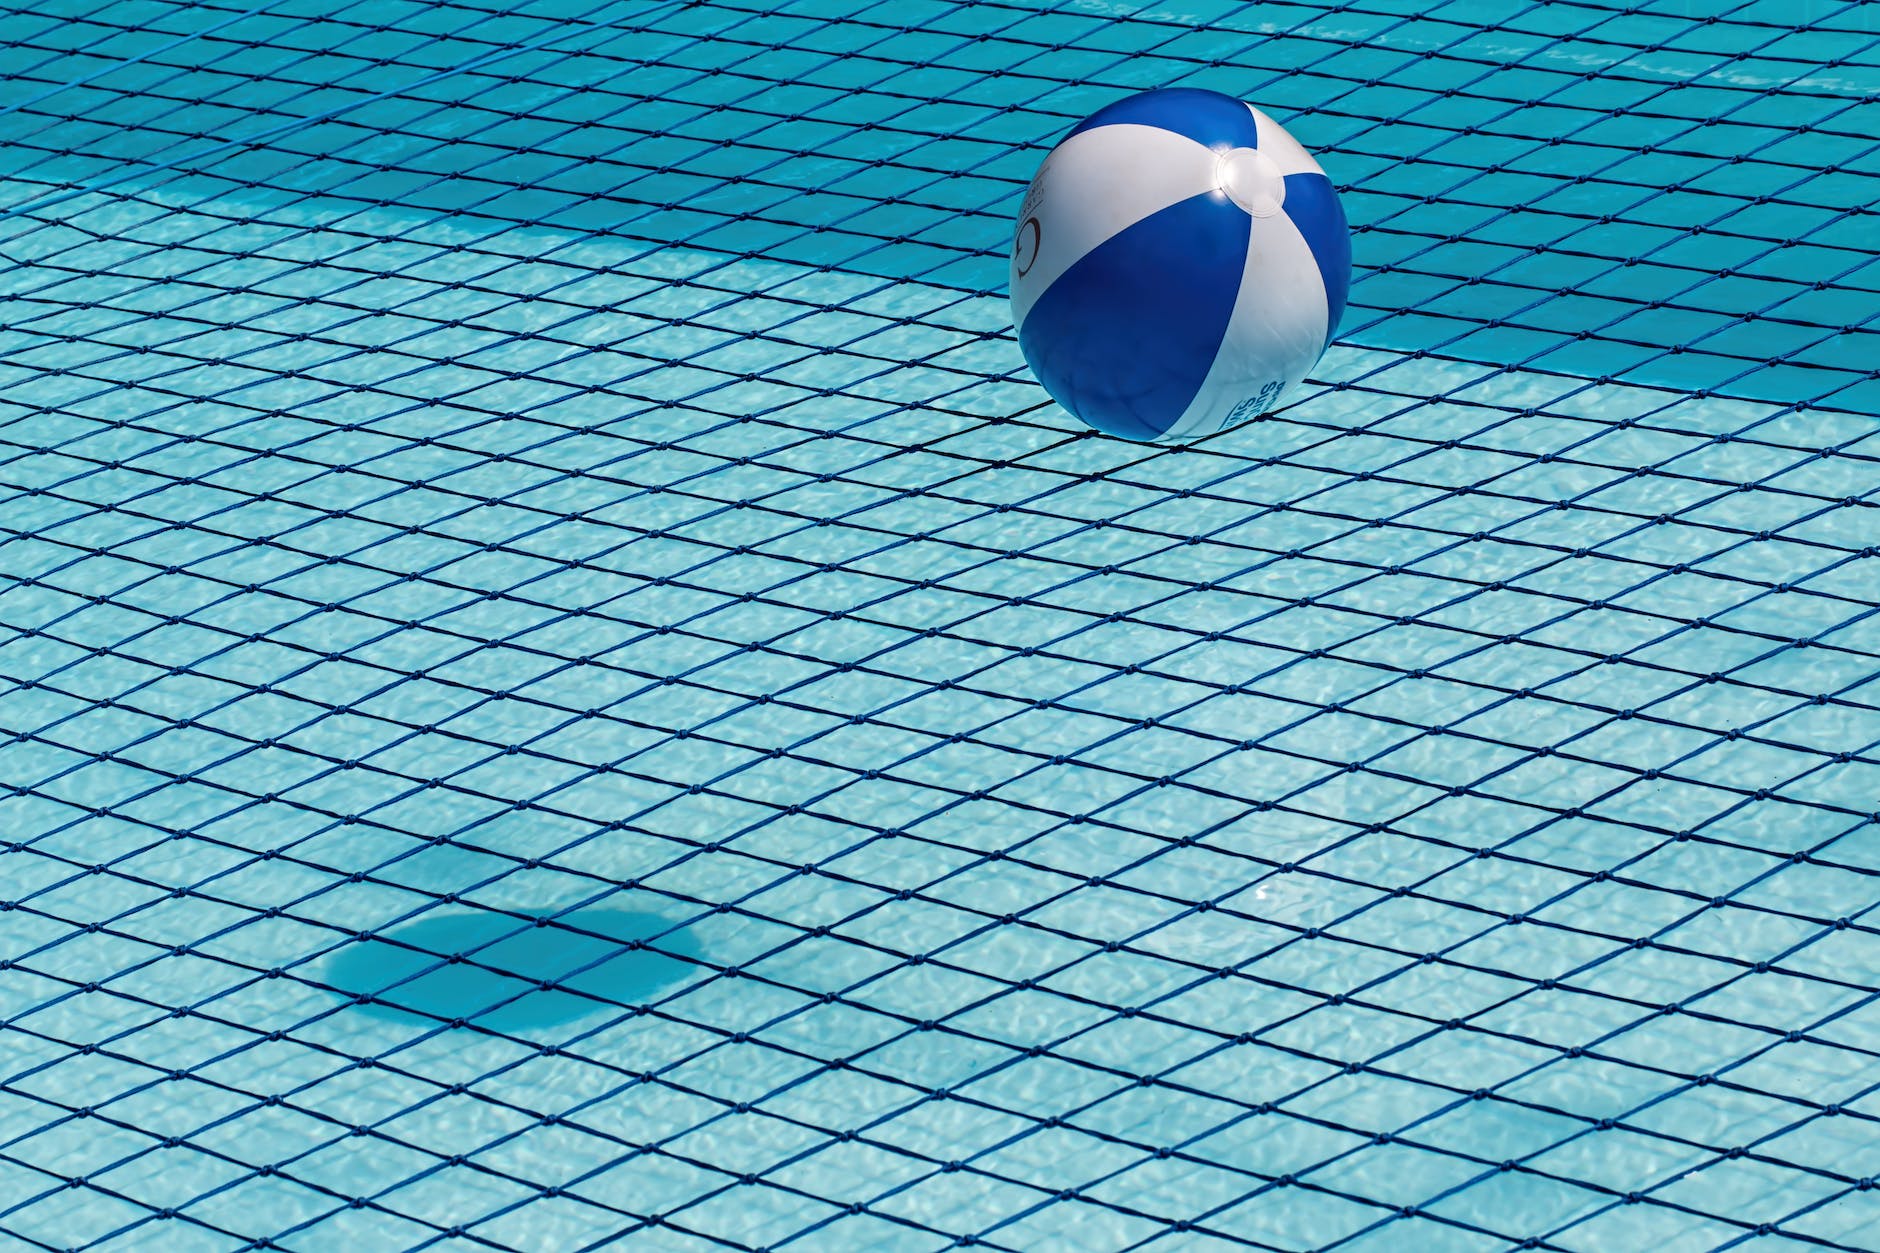 ball beach ball pool swimming pool